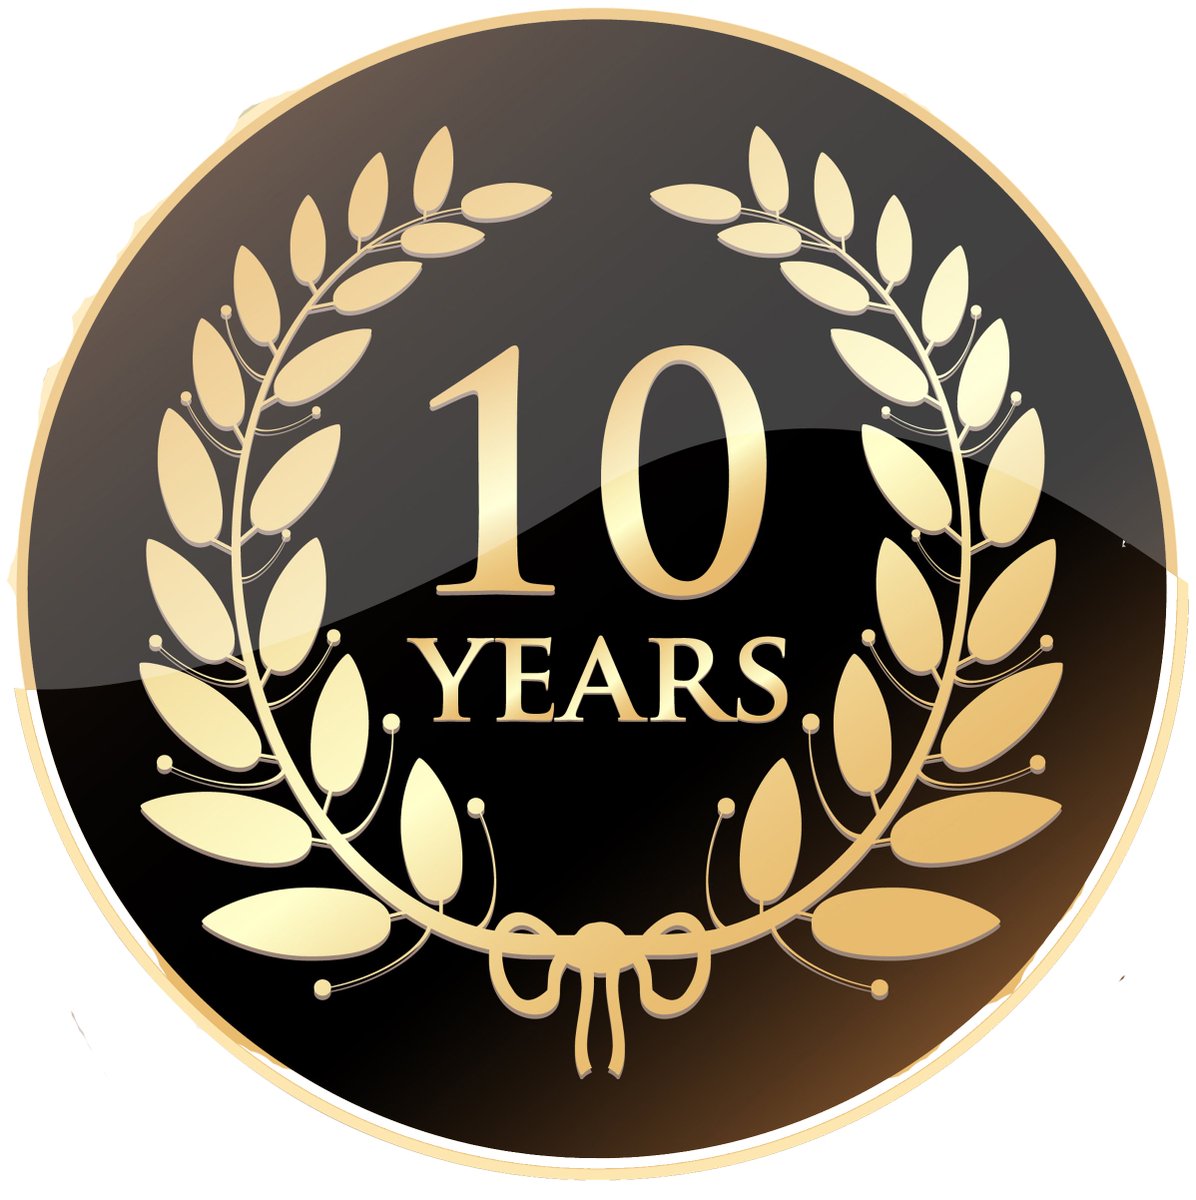   10 years badge